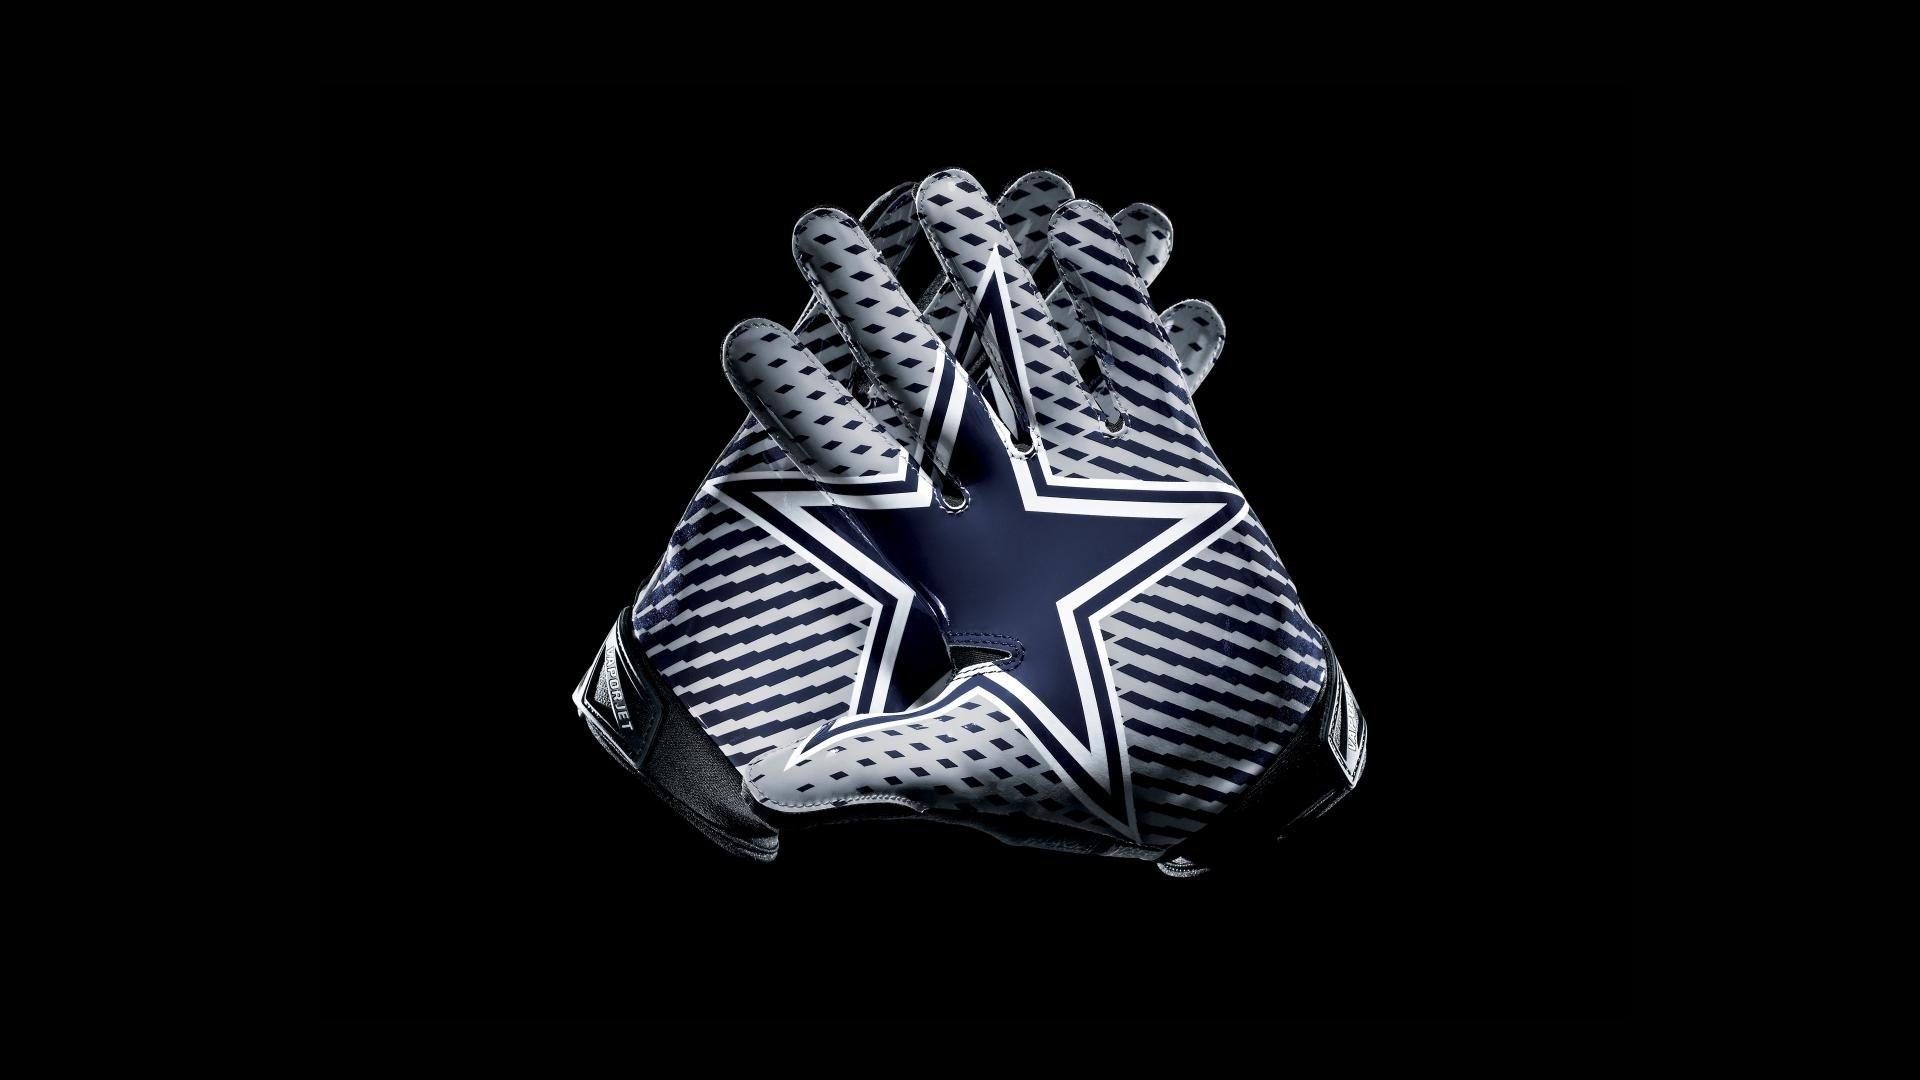 Dallas Cowboys Wallpaper HD 2017 best picture